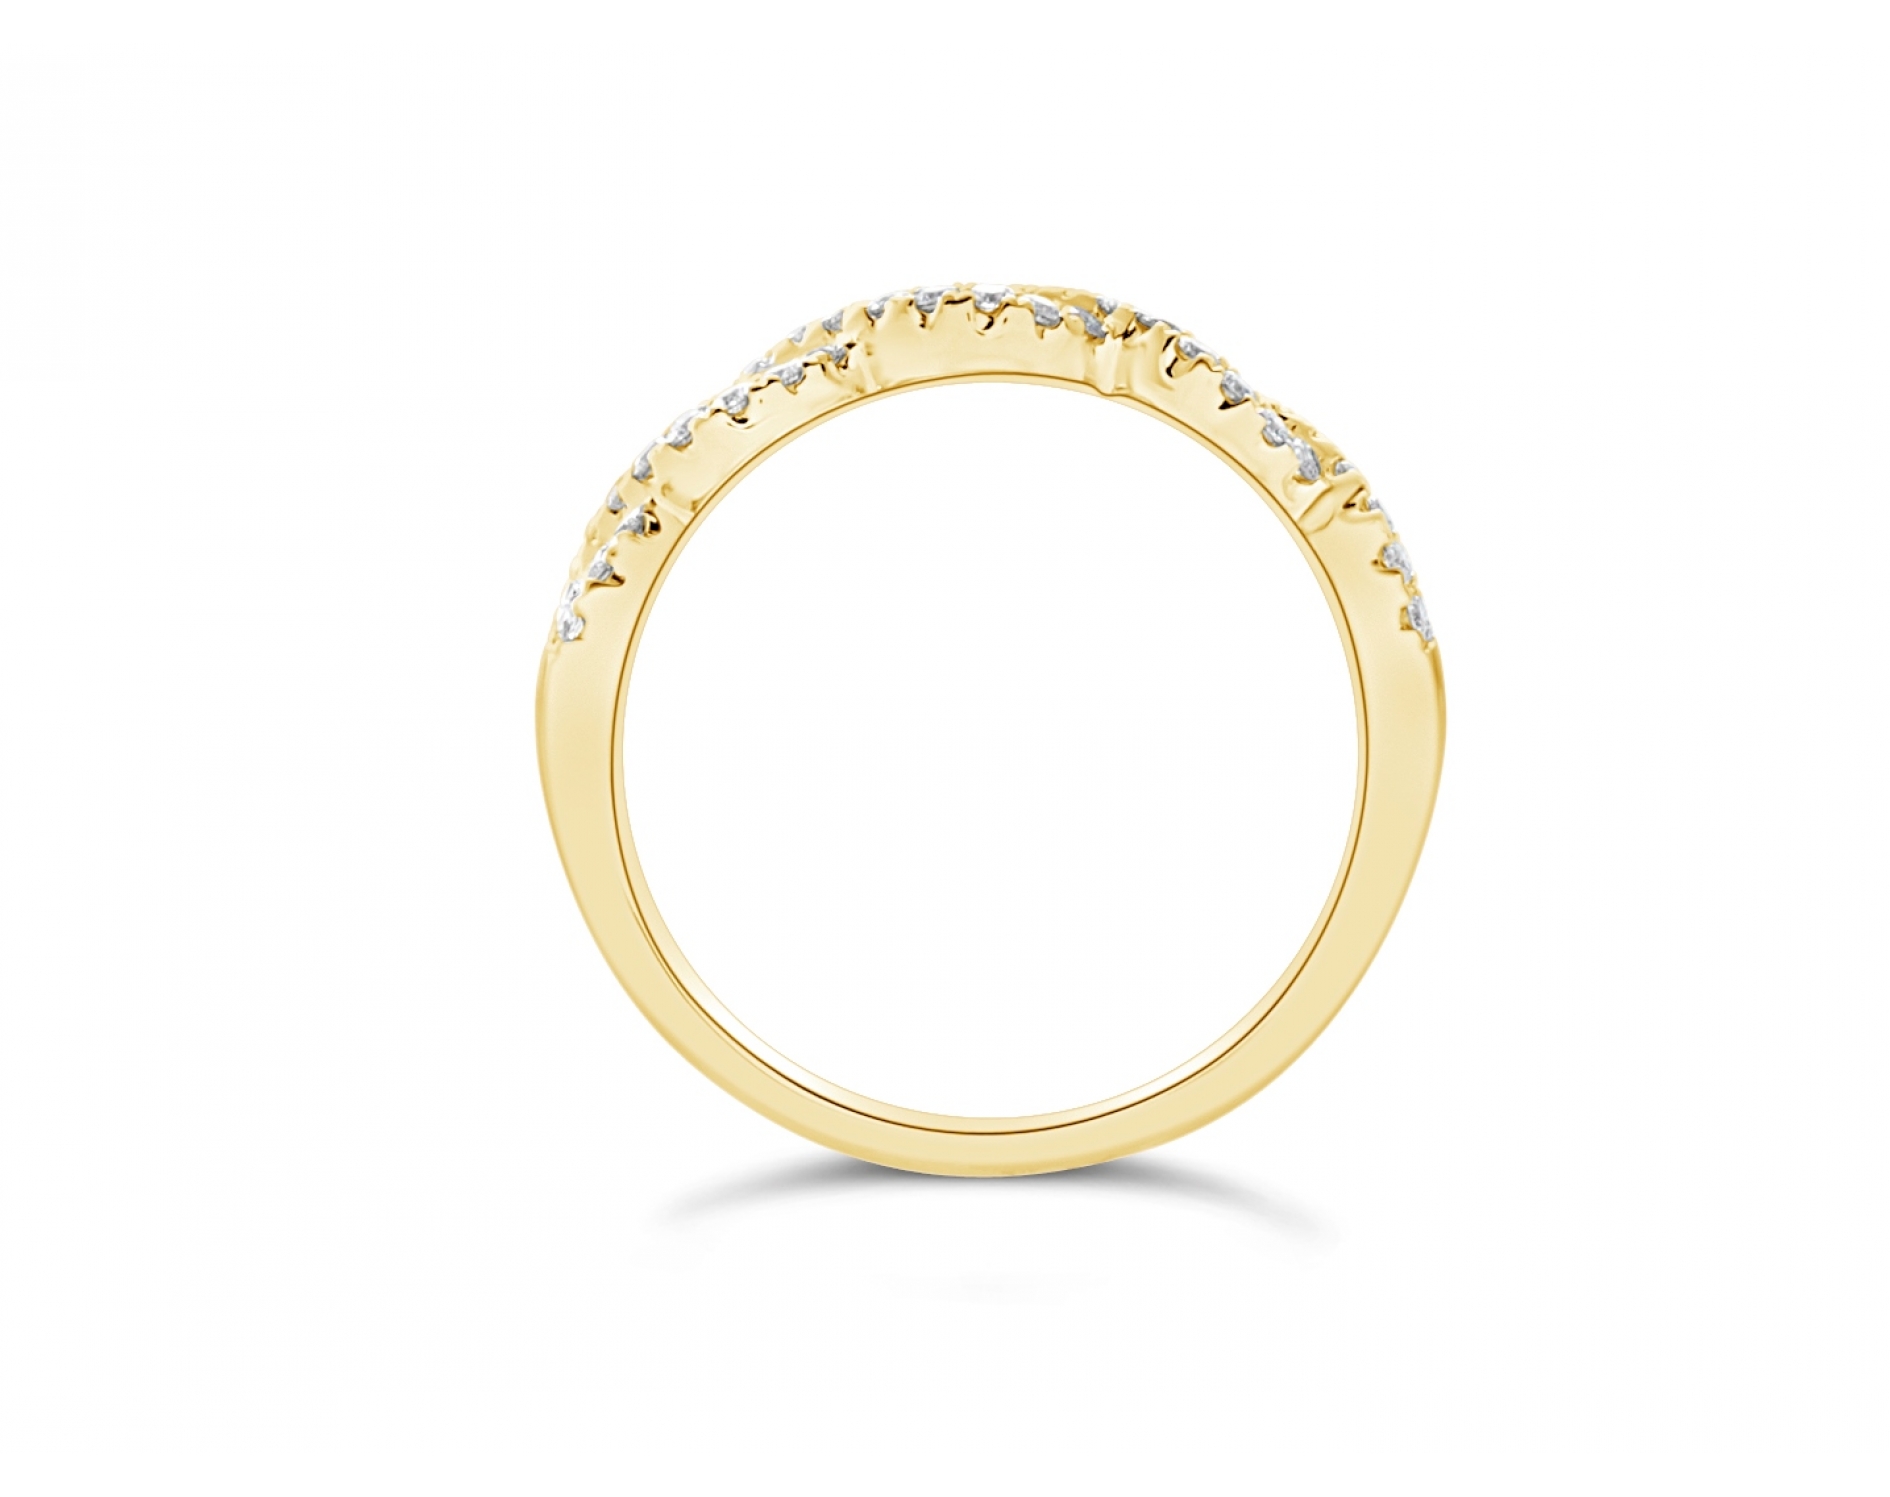 18k yellow gold half eternity infinity halo and pave set round brilliant diamond wedding ring